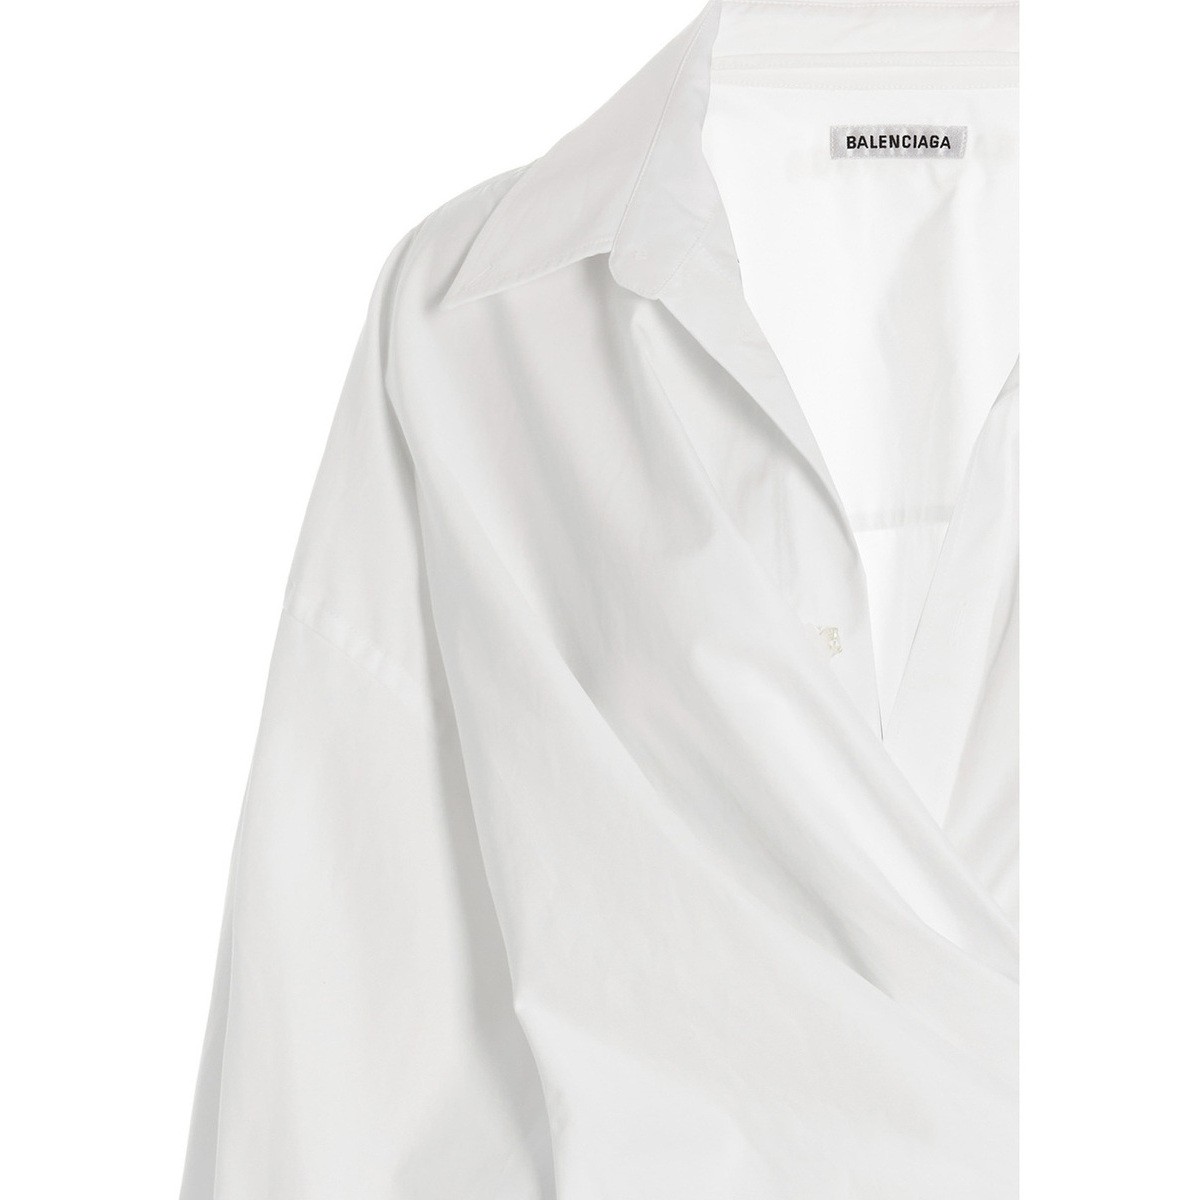 BALENCIAGA バレンシアガ White shirt 704458TYB189000 'Wrap' 秋冬